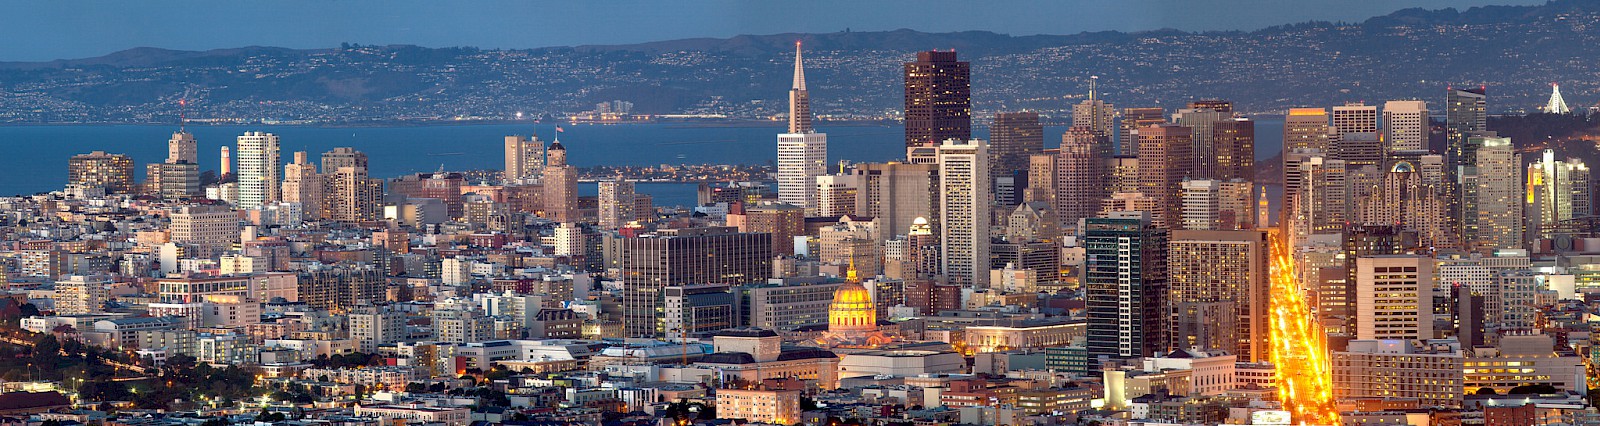 San Francisco skyline, photo by Andrew Kearns at [Flickr](https://flic.kr/p/pNEazS)